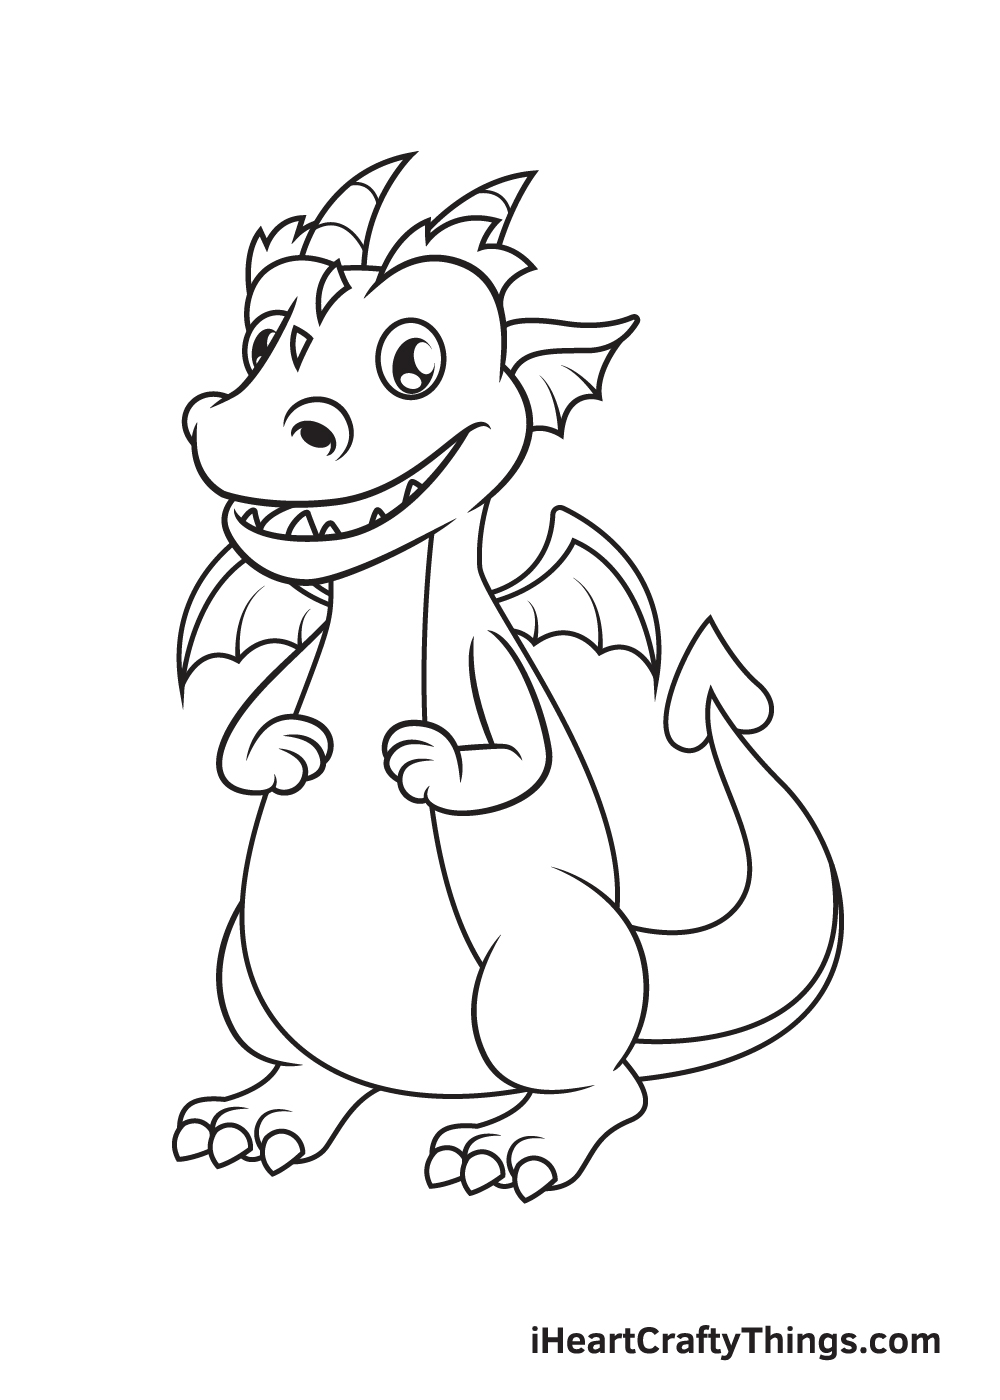 Dragon Drawing – Step 8